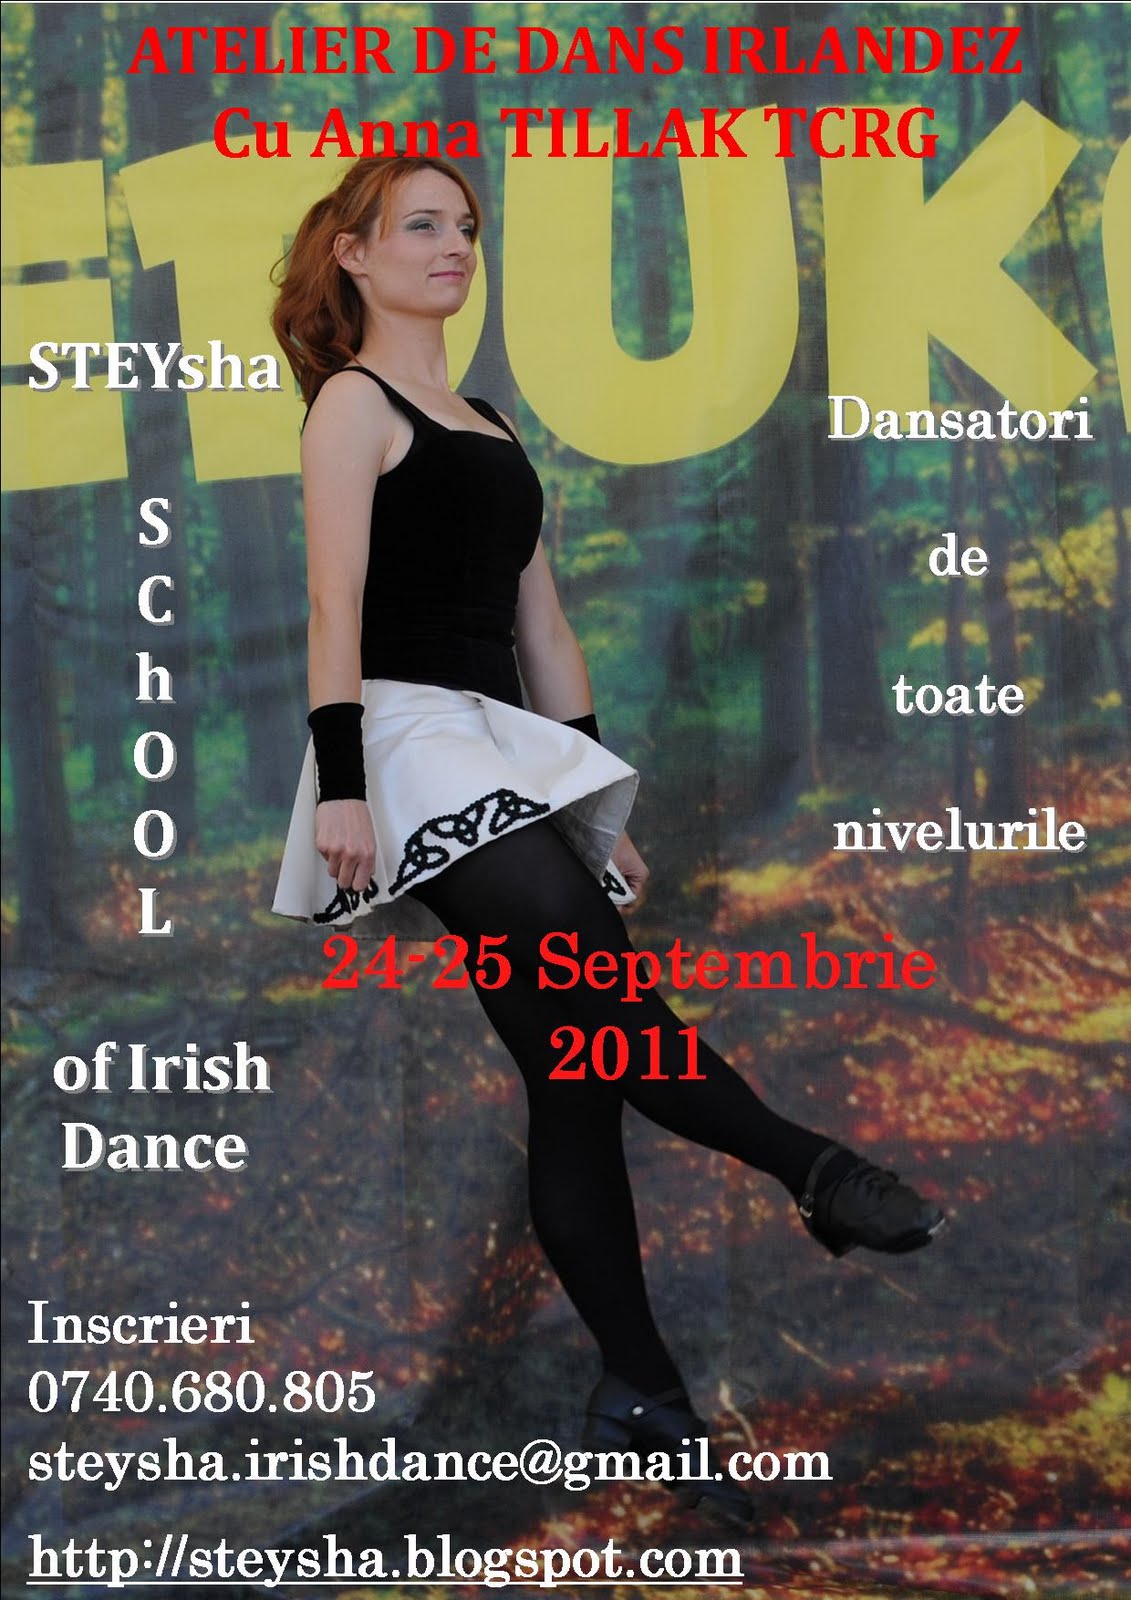 Atelier de dans irlandez cu Anna Tillak